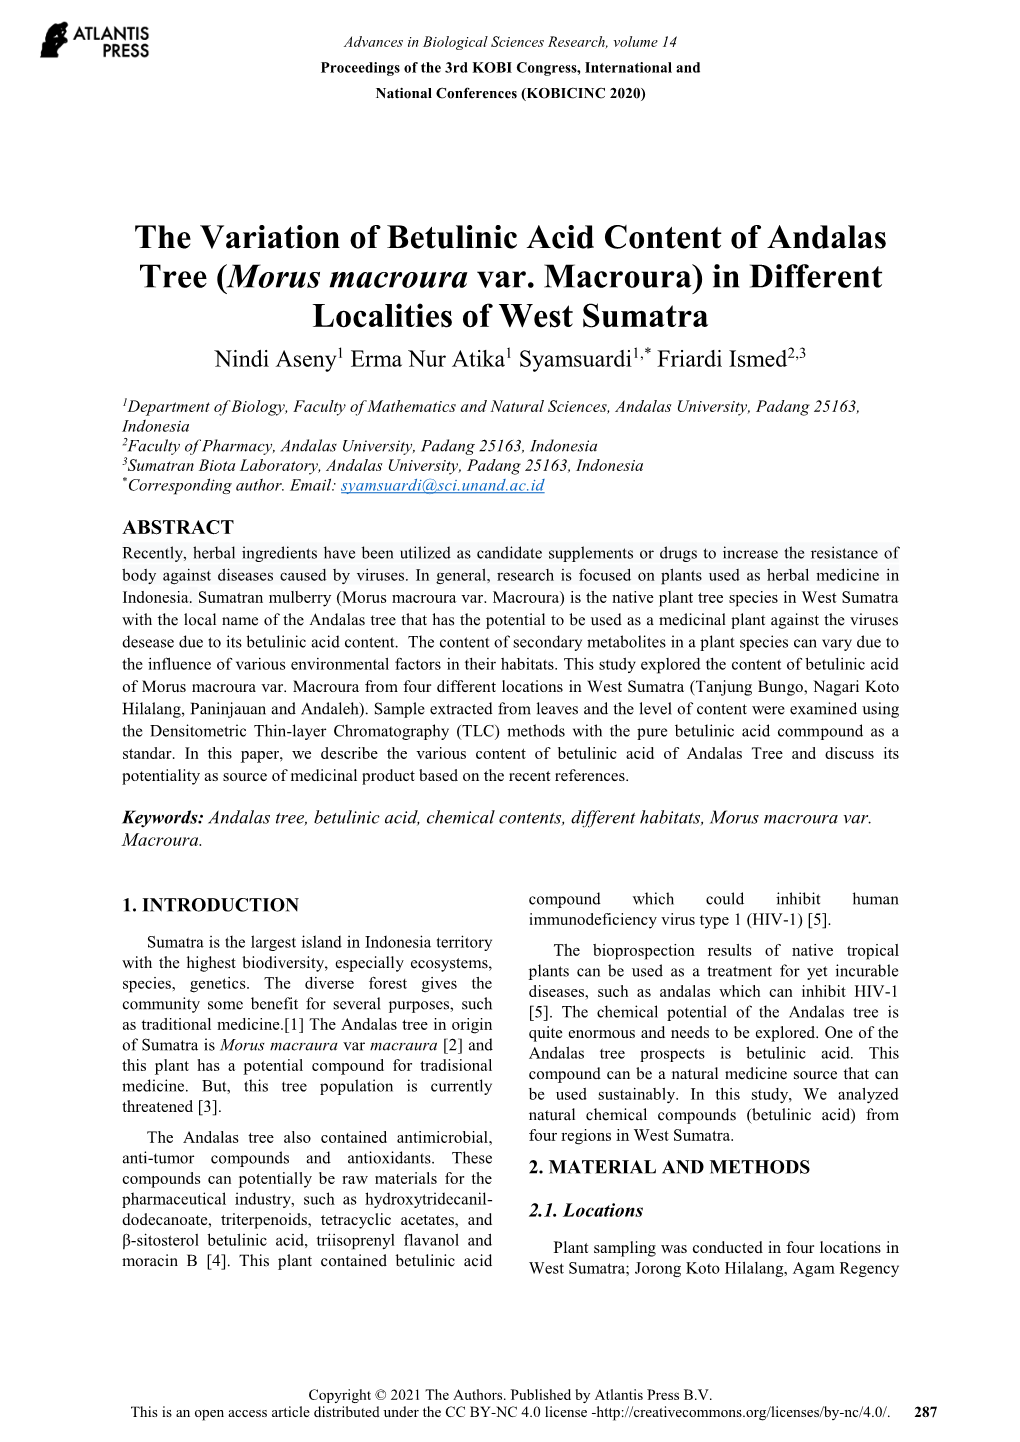 The Variation of Betulinic Acid Content of Andalas Tree (Morus Macroura Var